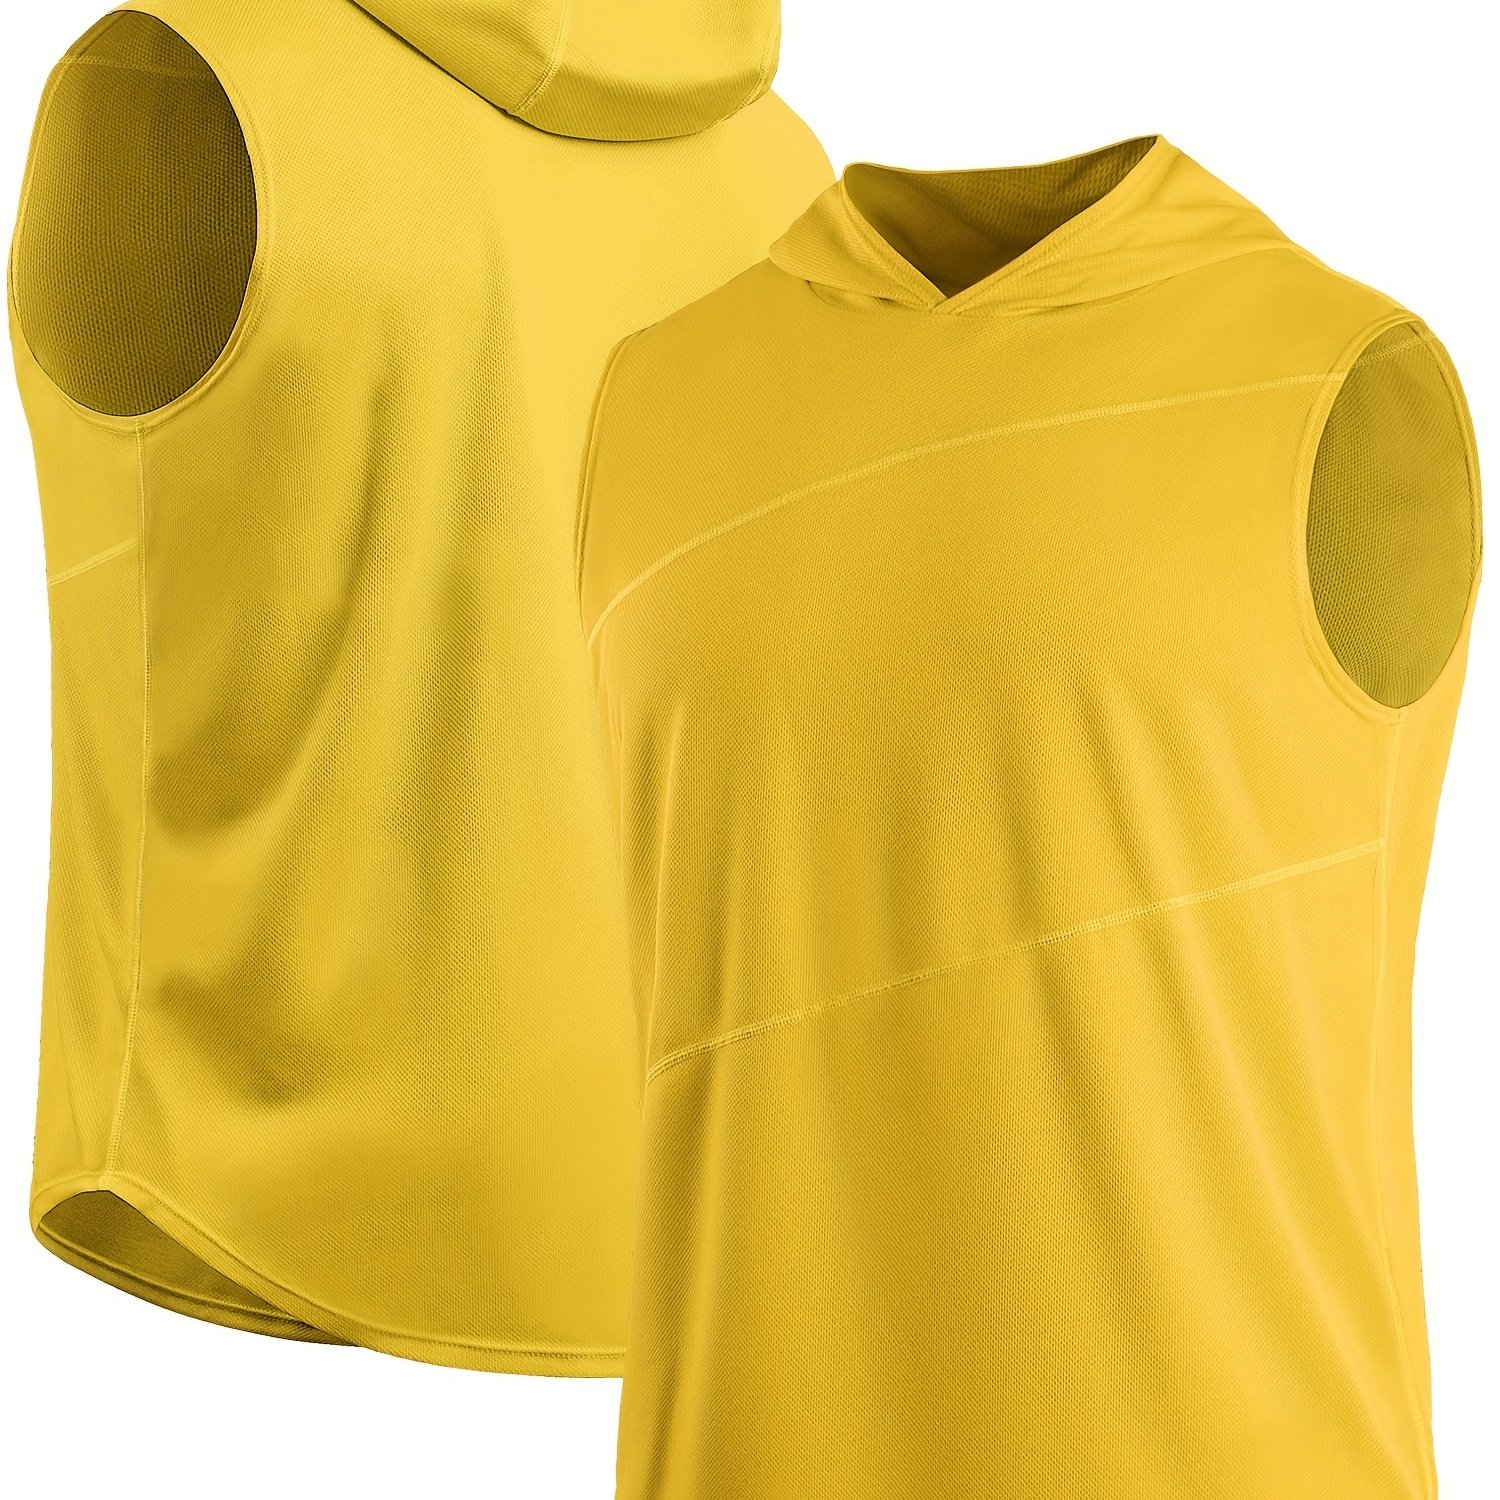 Quick-Drying Men's Sleeveless Hooded Vest for Fitness Training, Basketball, Running, and More